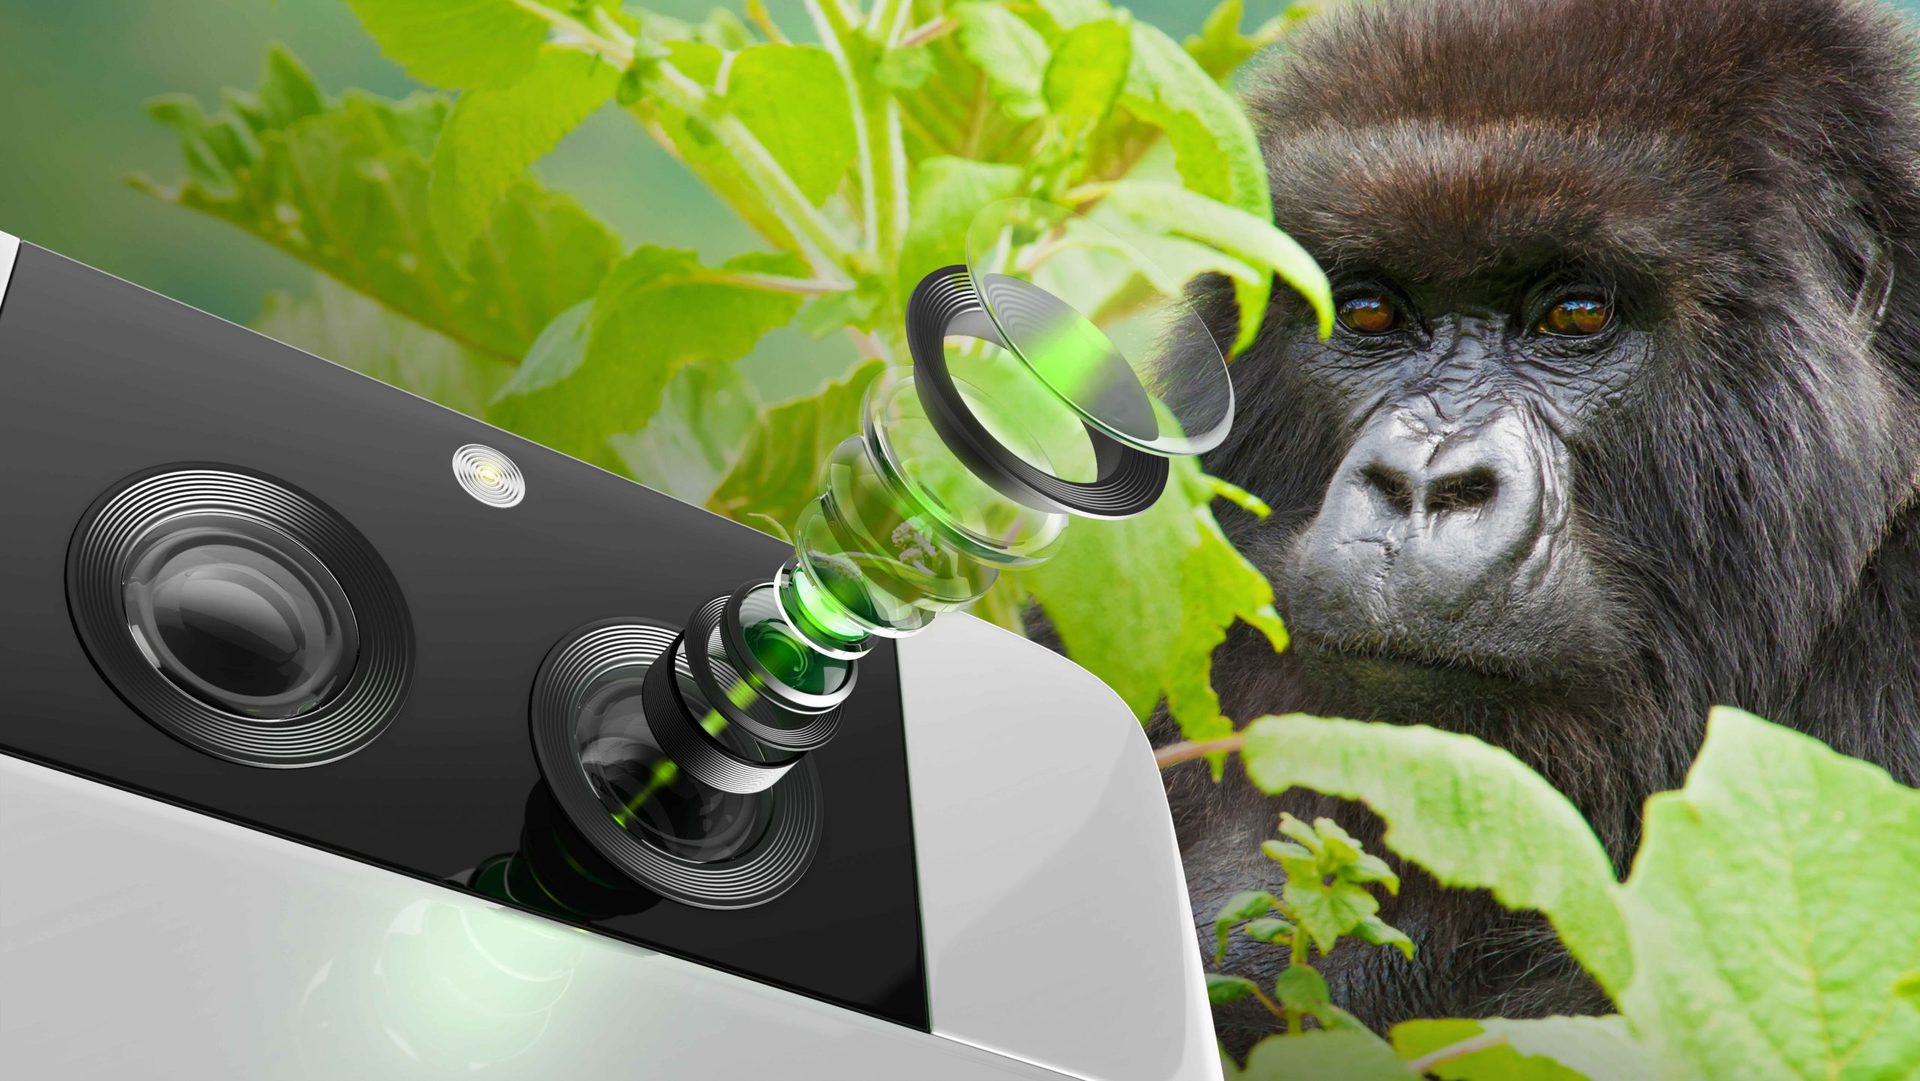 Corning Gorilla Glass DX for cameras